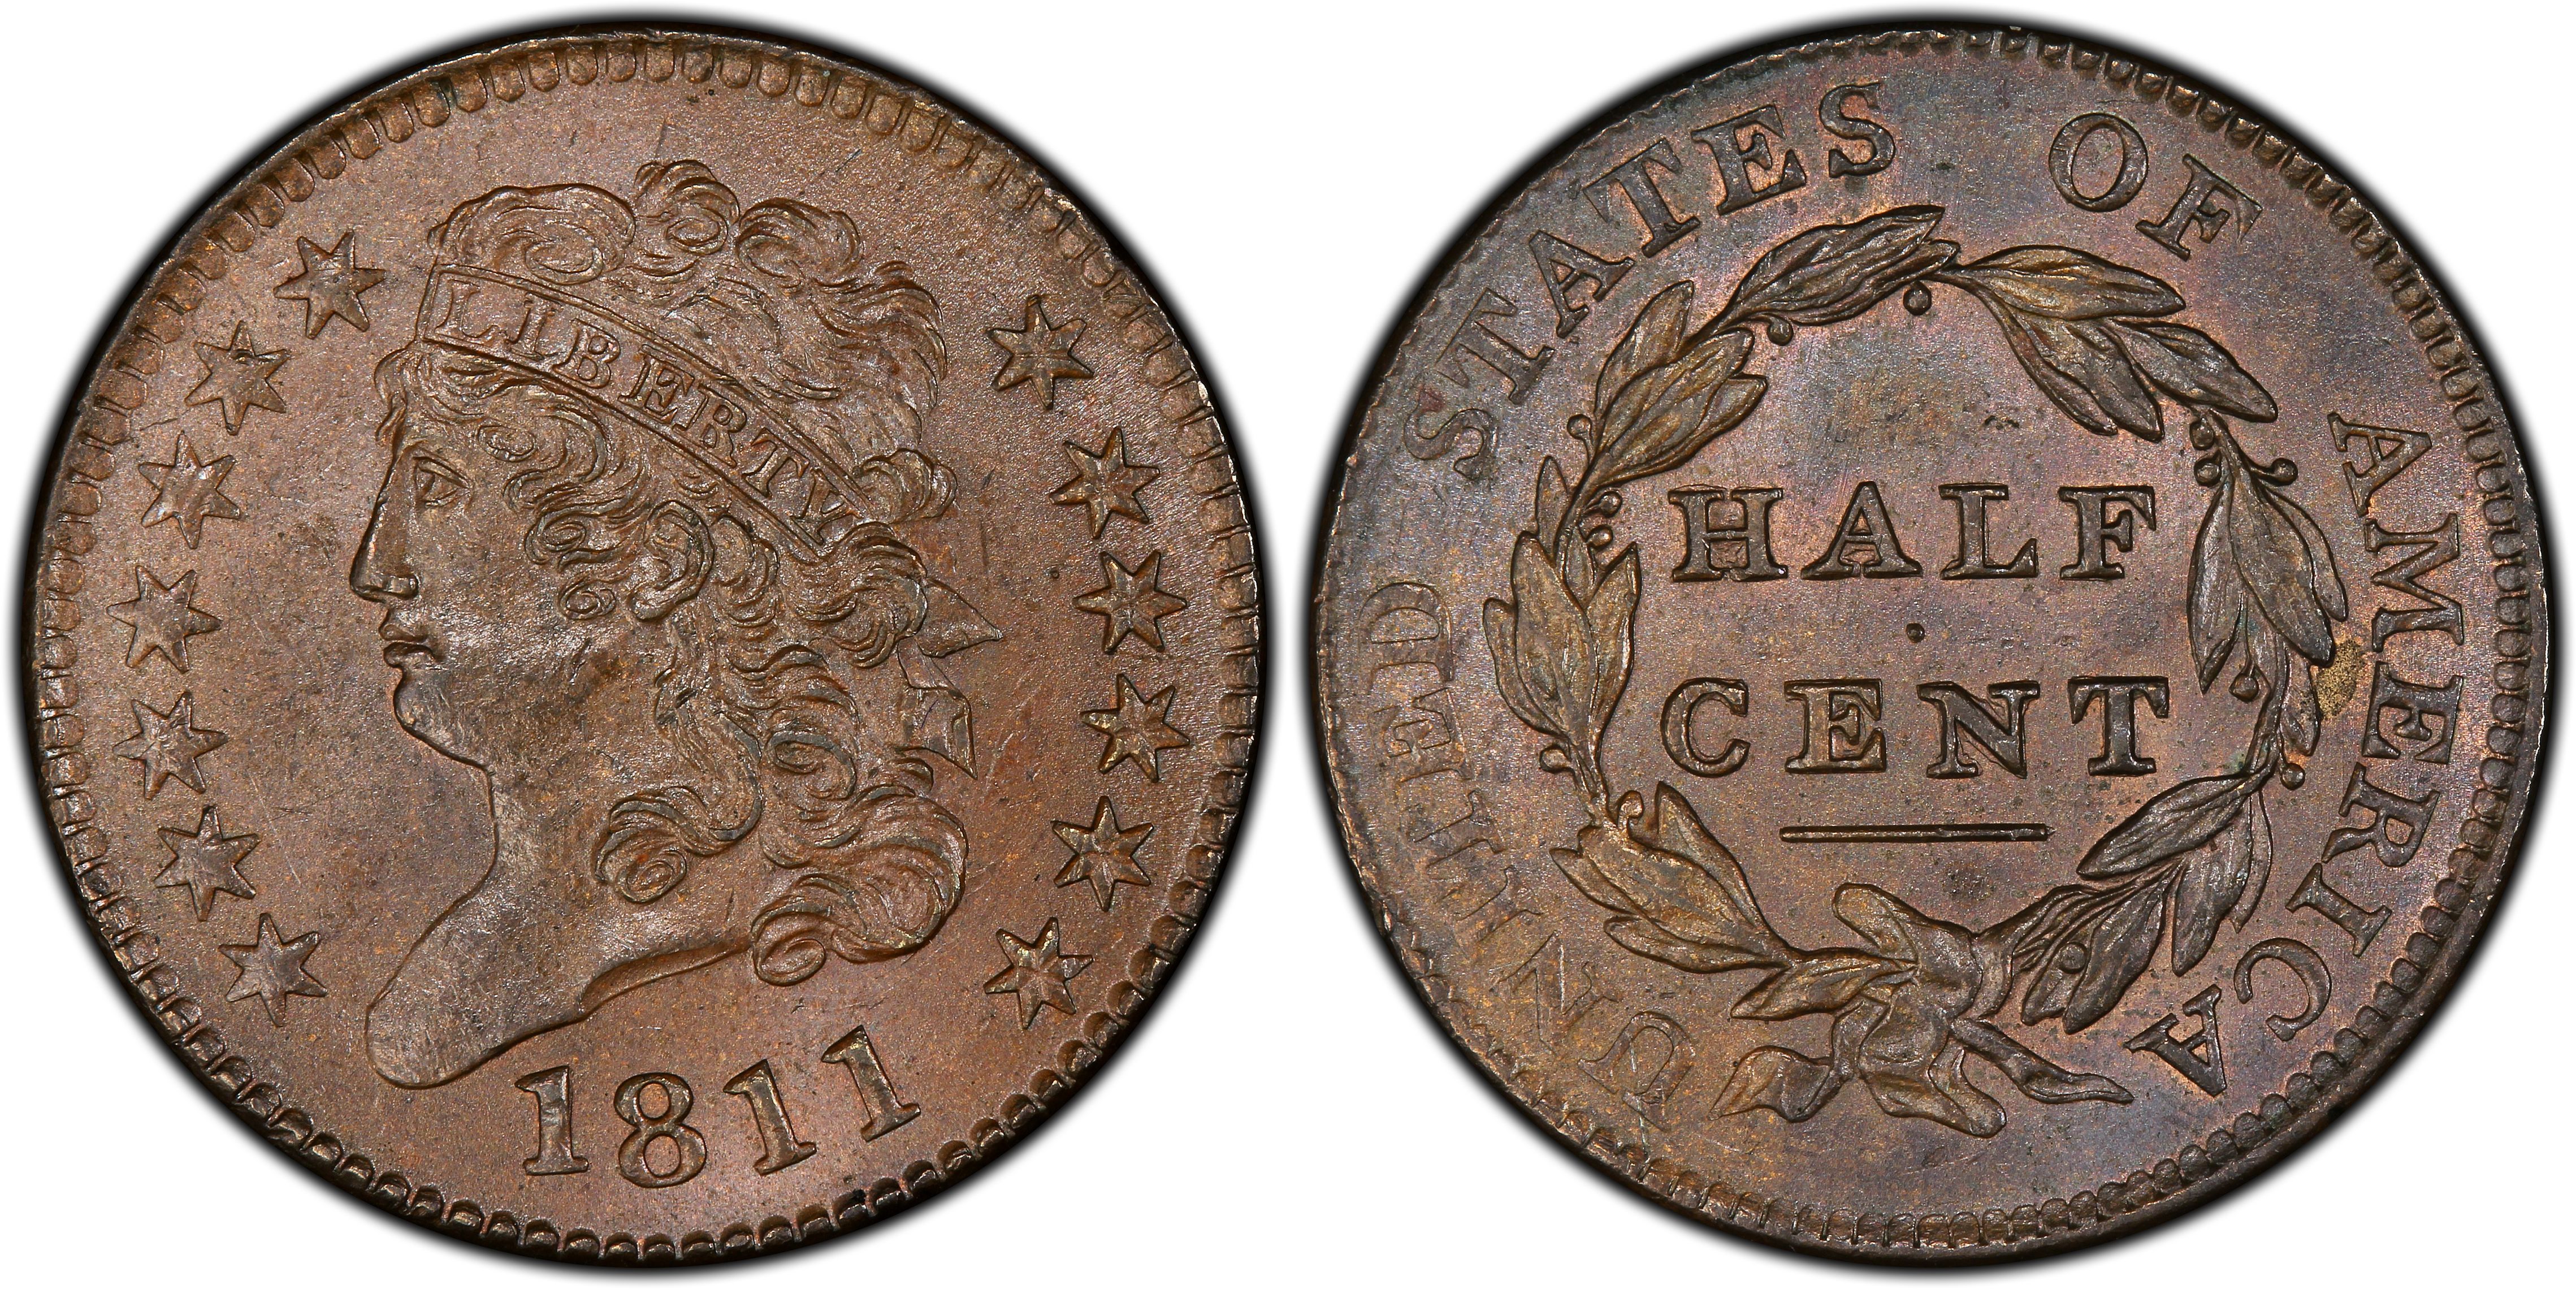 1853 1/2C, BN (Regular Strike) Braided Hair Half Cent - PCGS CoinFacts